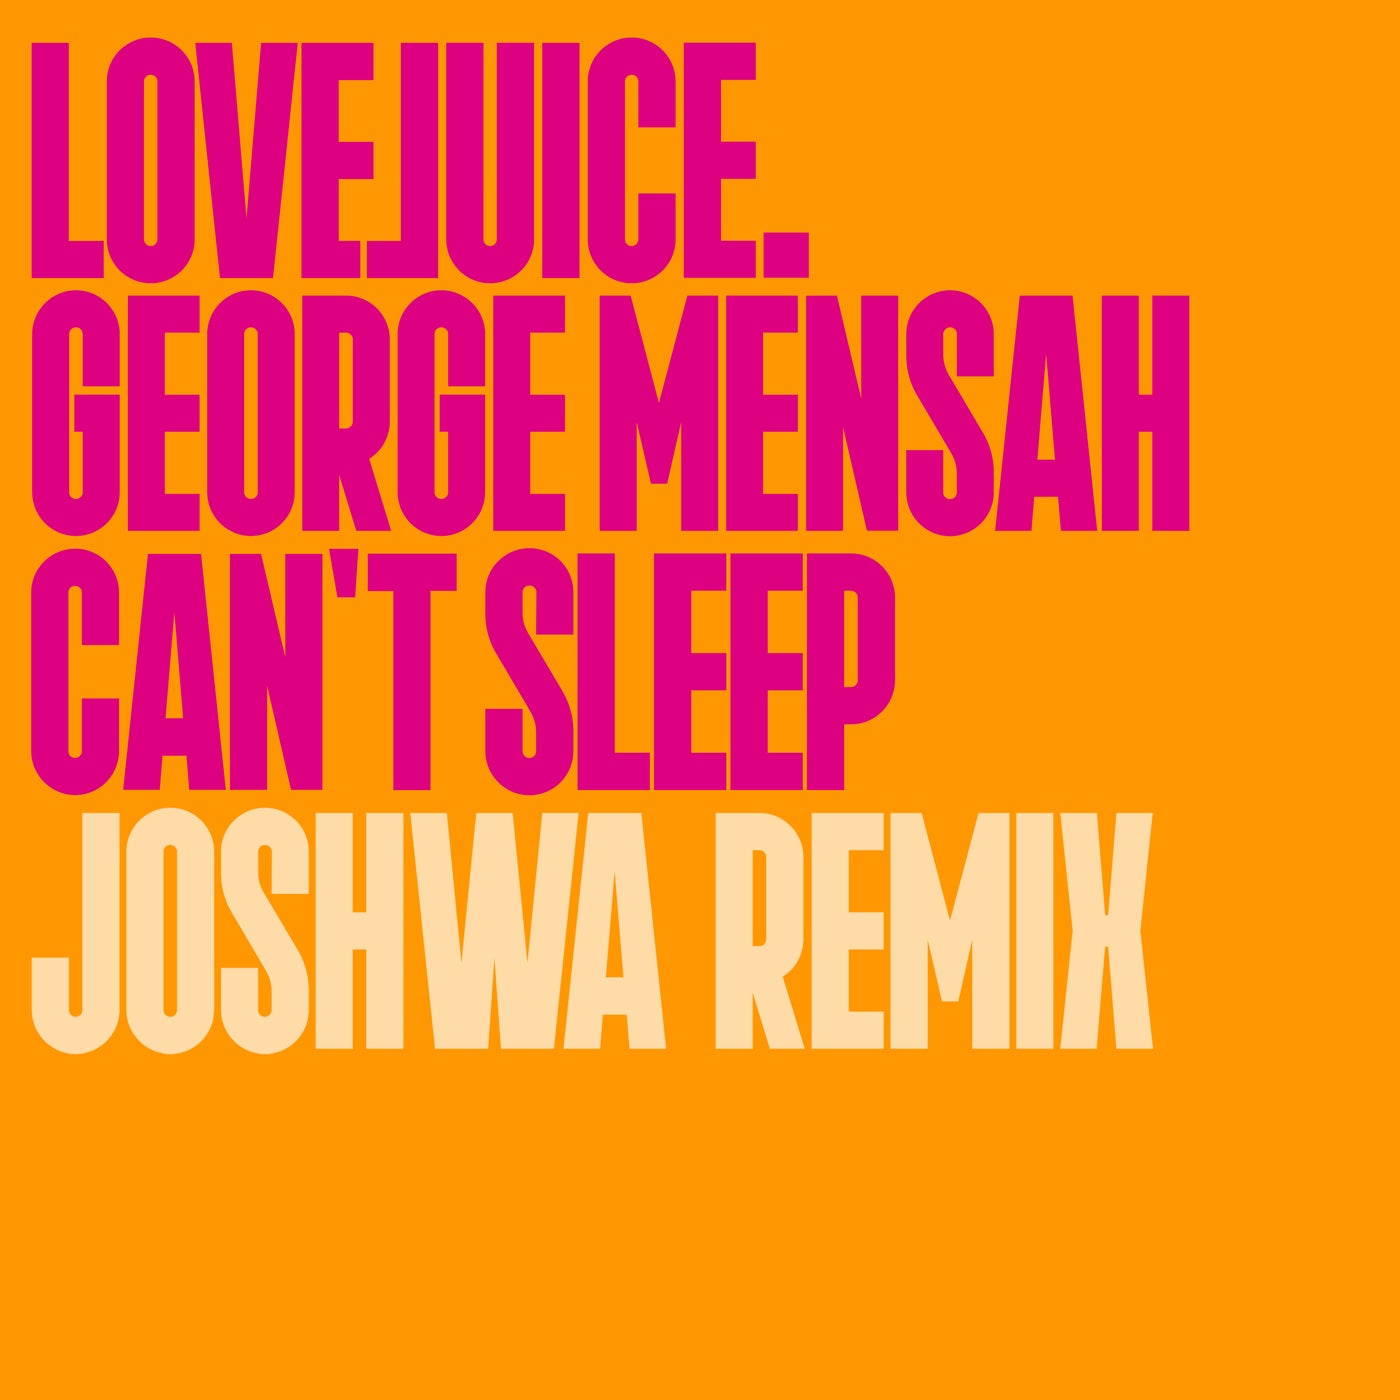 Joshwa (UK), George Mensah - Can't Sleep (Joshwa Extended Remix)